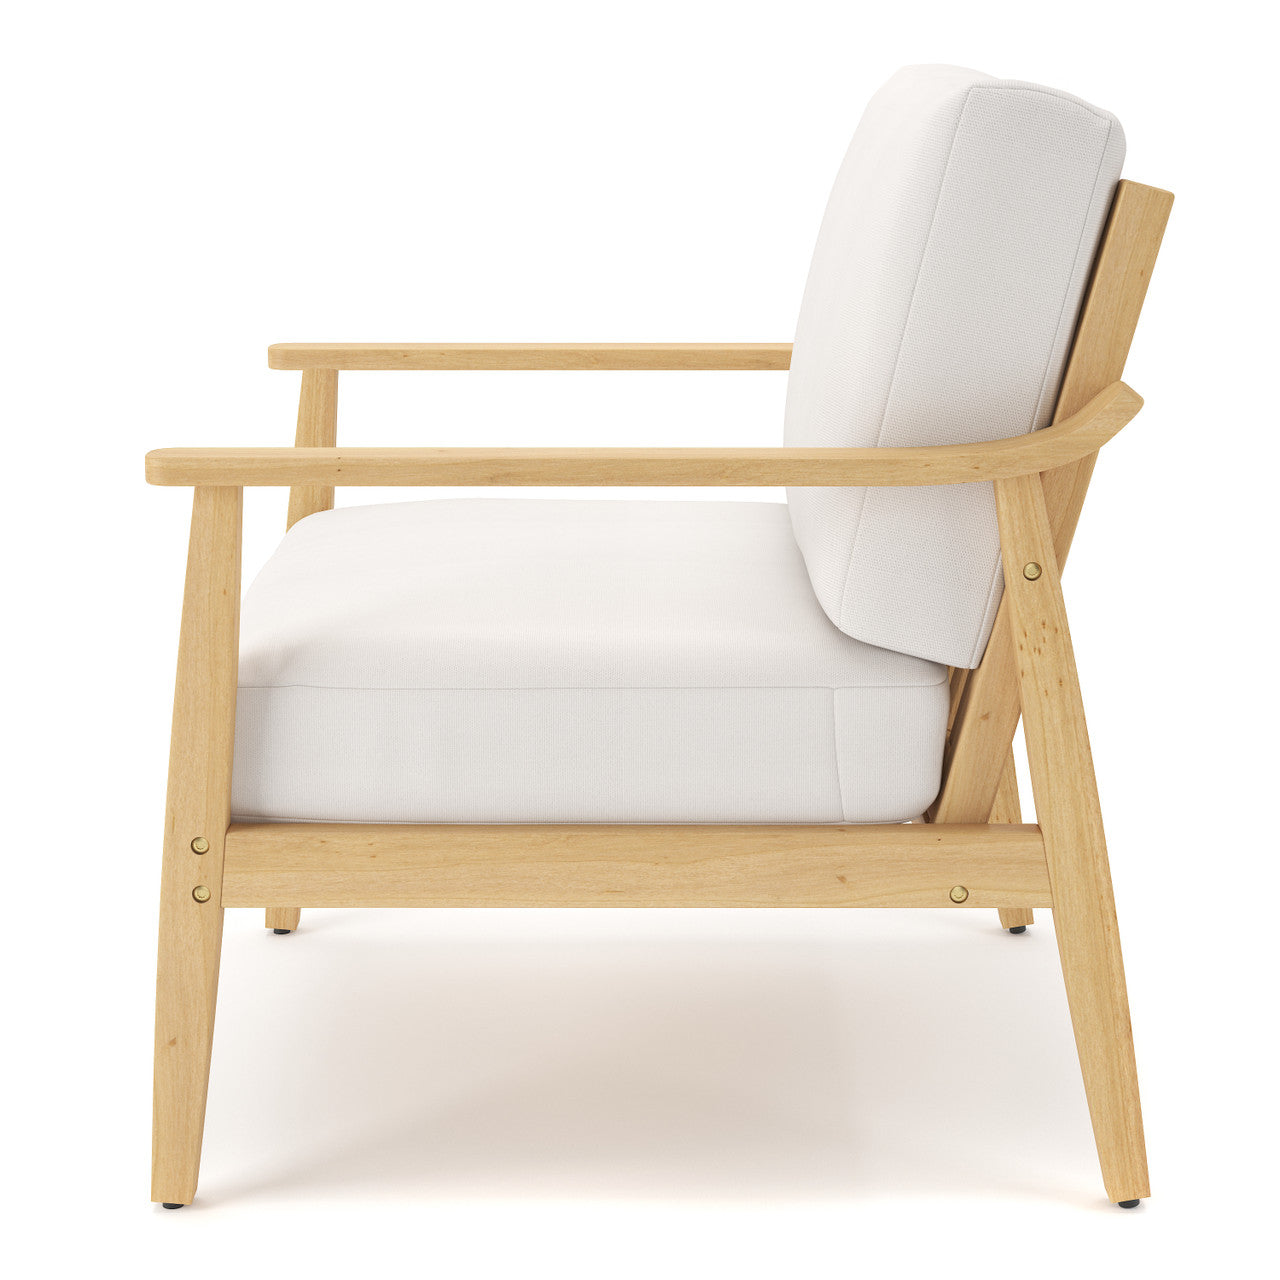 Forever Patio Hambrick Teak Hardwood Lounge Chair